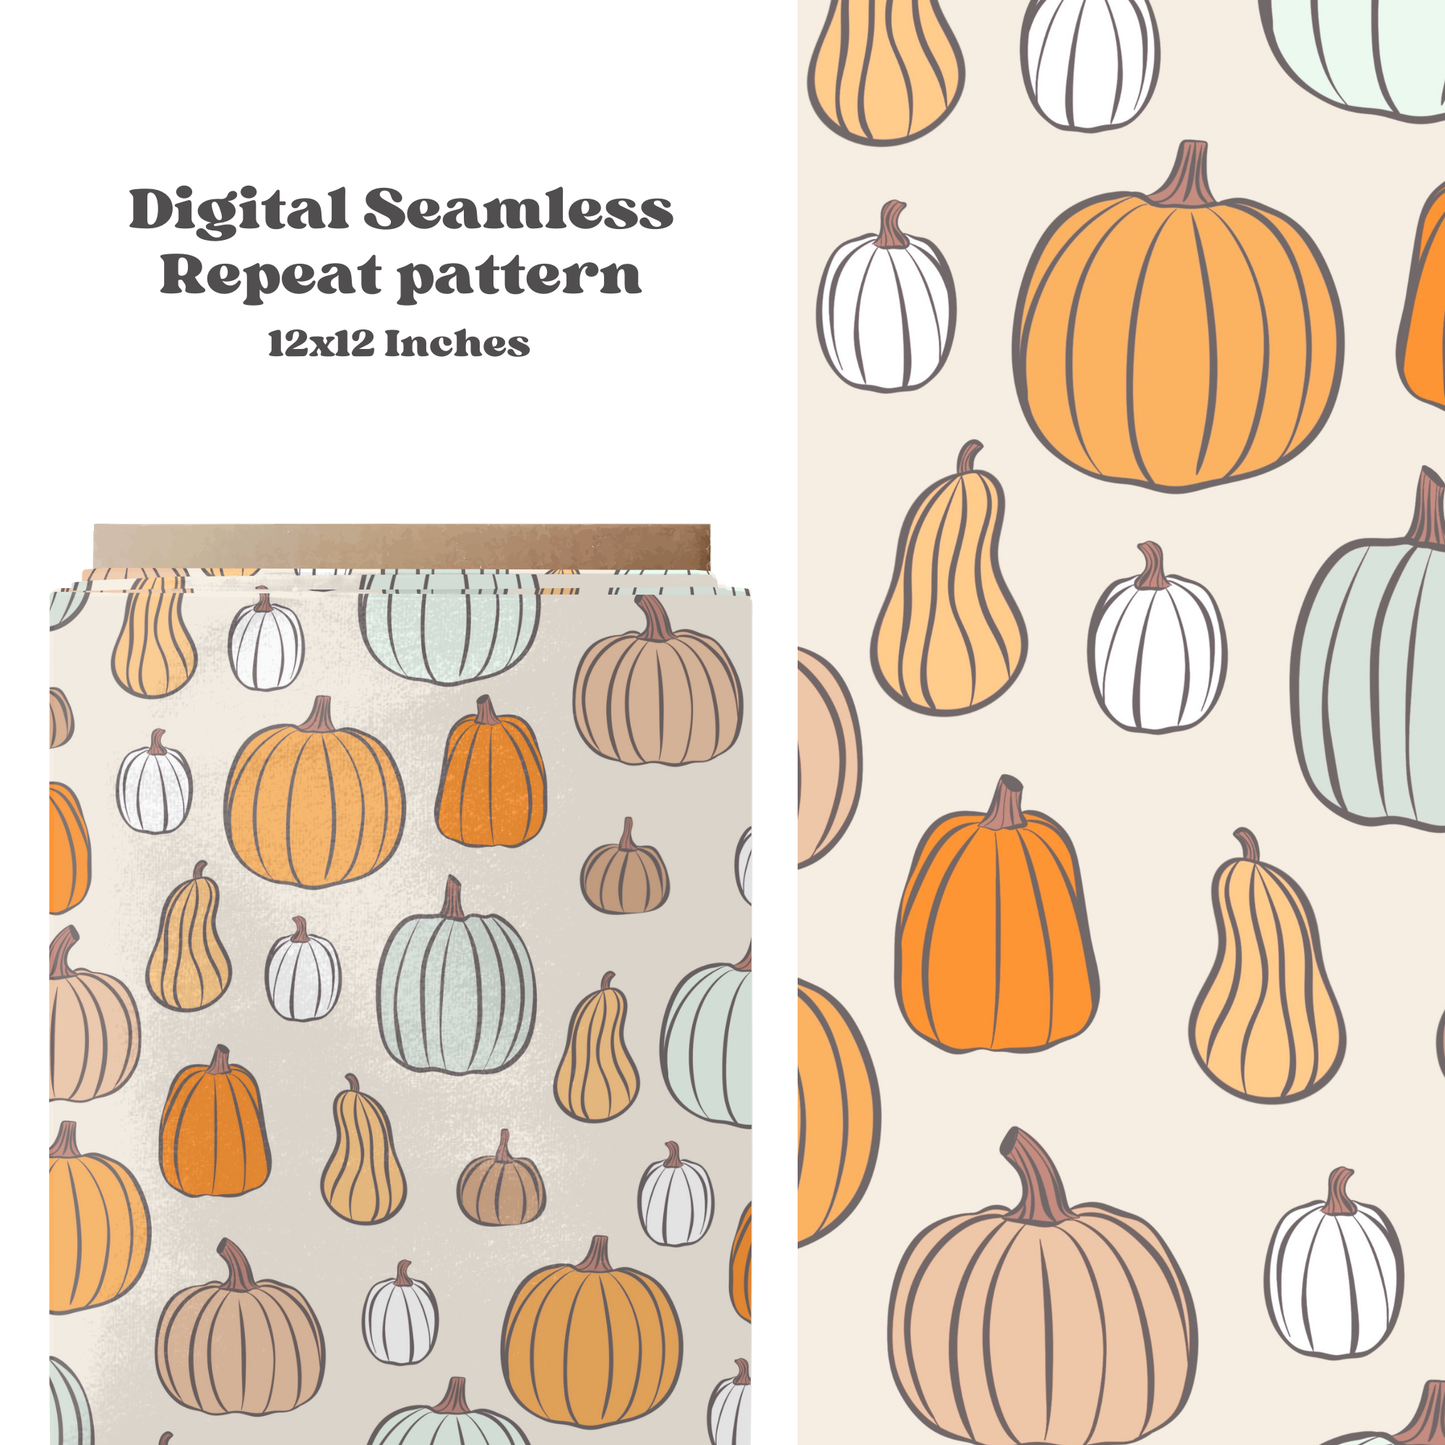 Boys fall pumpkins seamless pattern